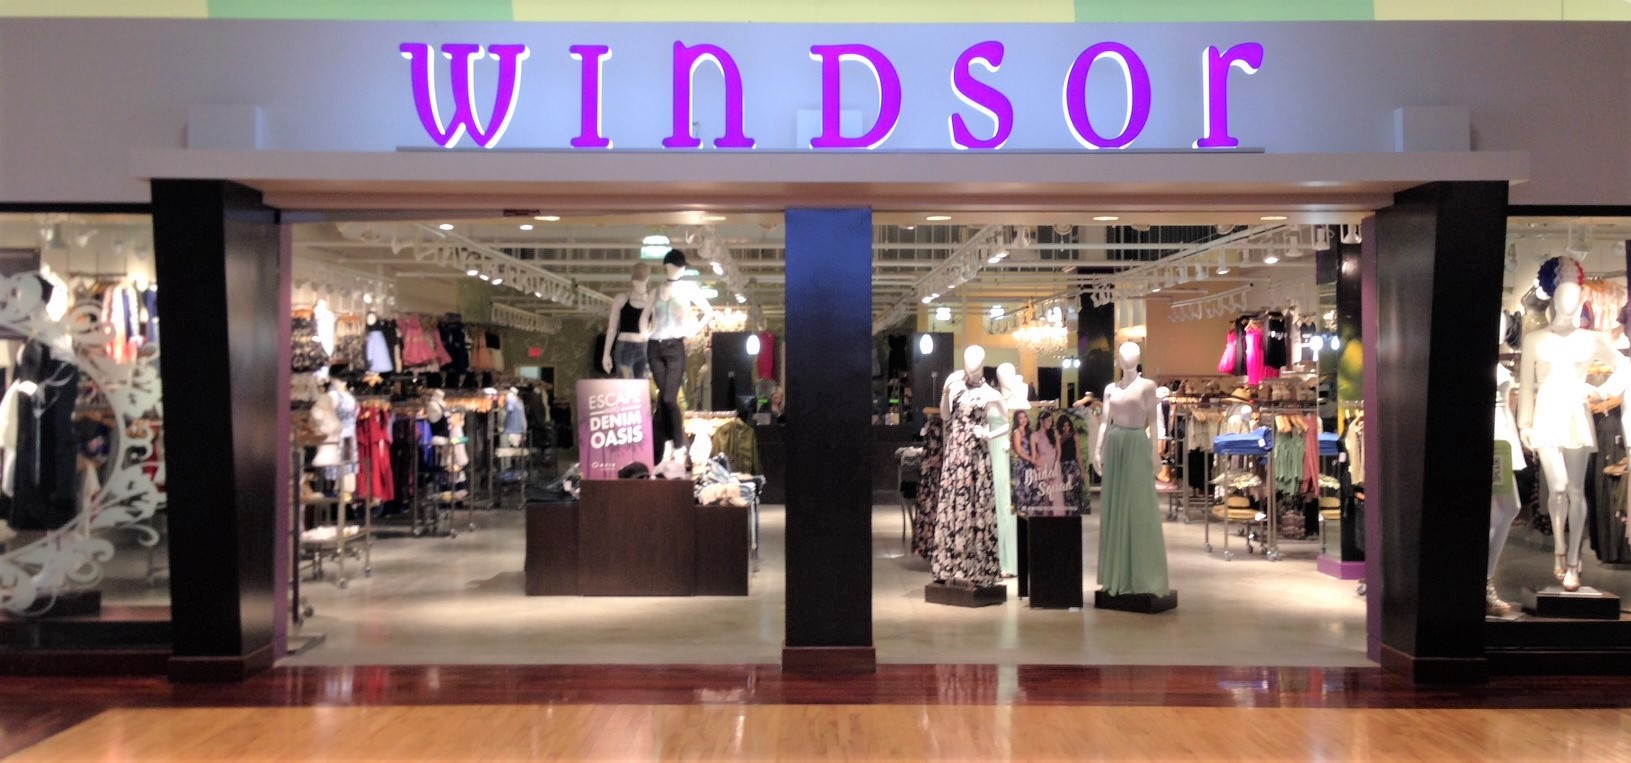 windsor dress shop near me